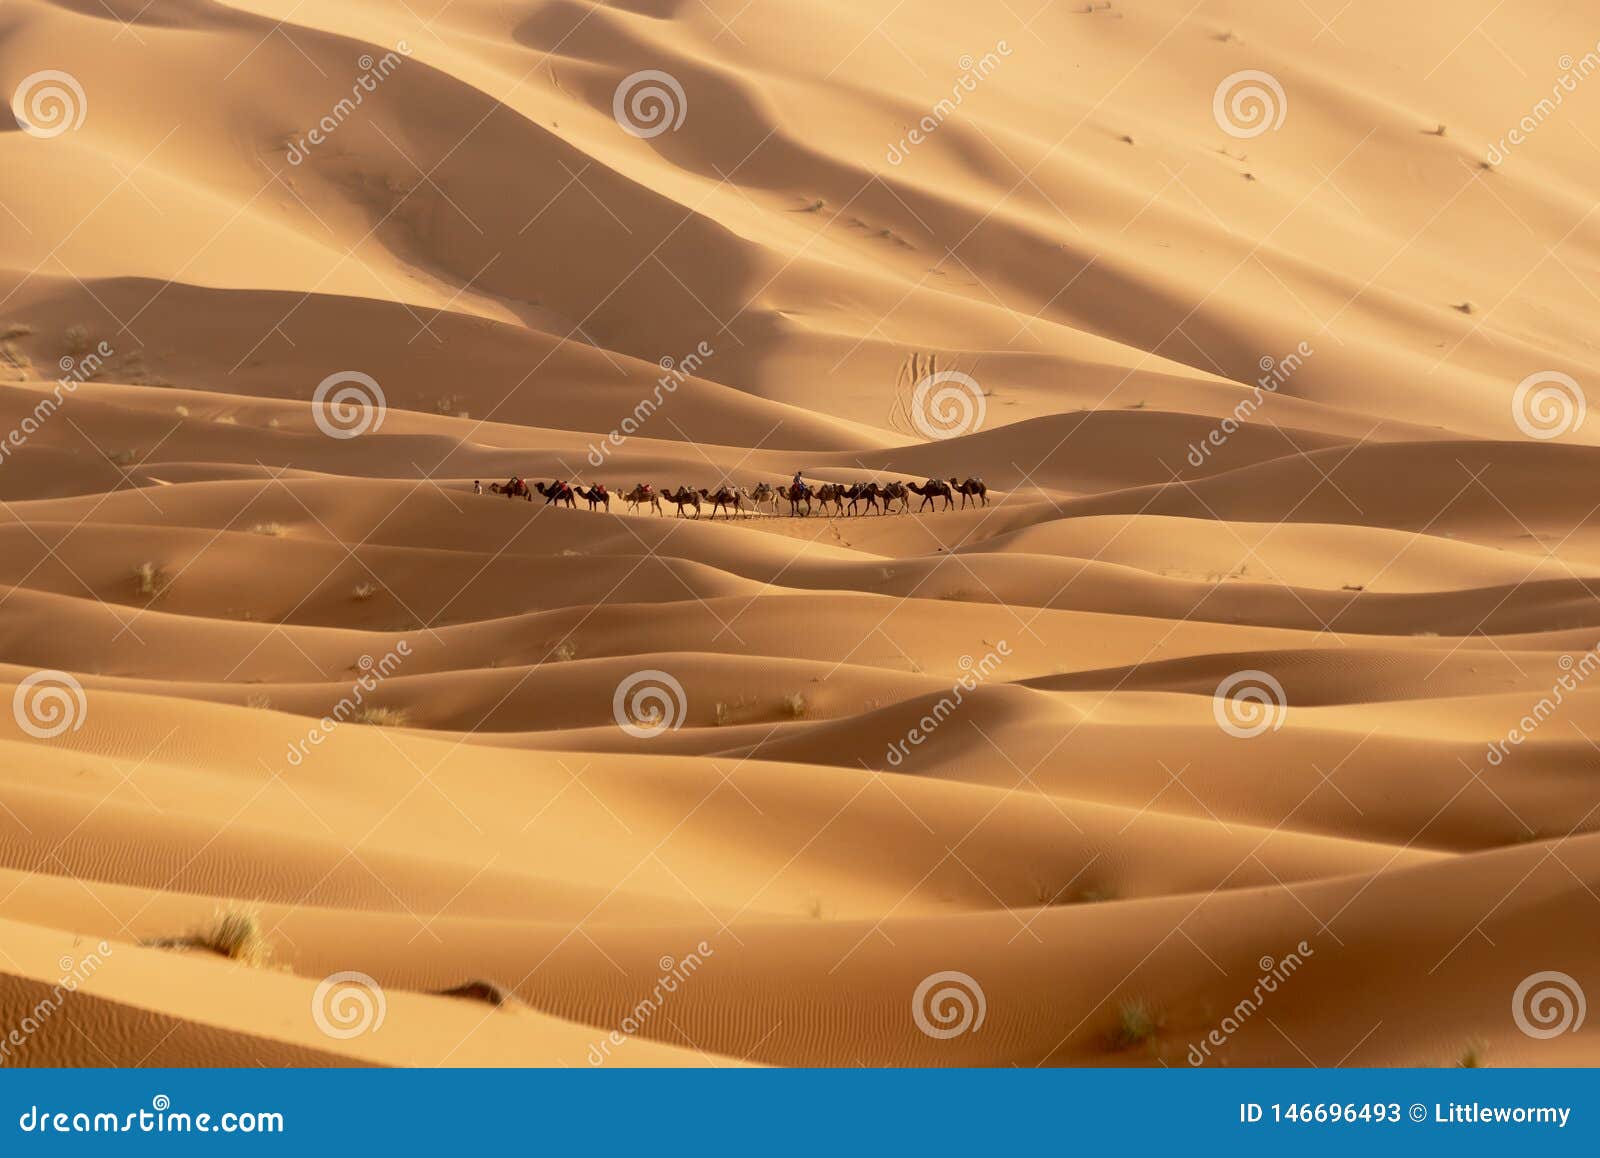 sahara desert in merzouga, morocco